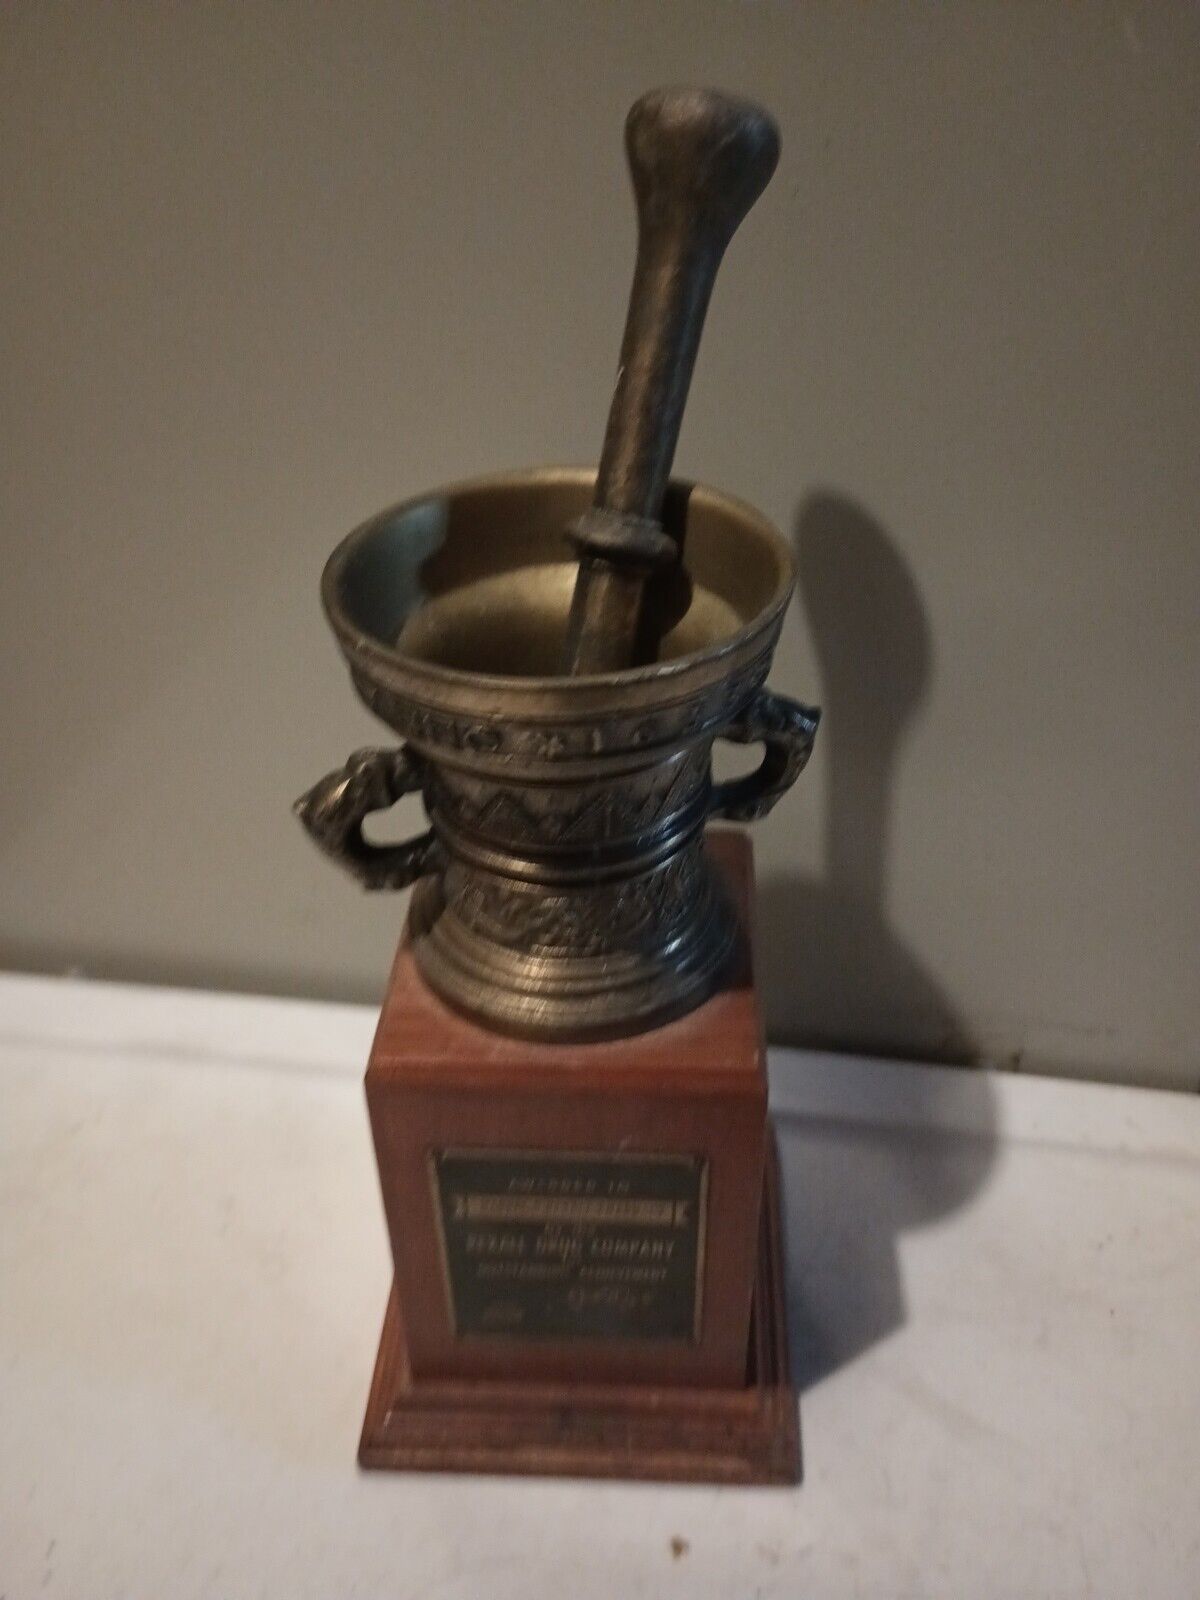 Vintage Rexall Award Trophy 1958 Dodge Trophy 